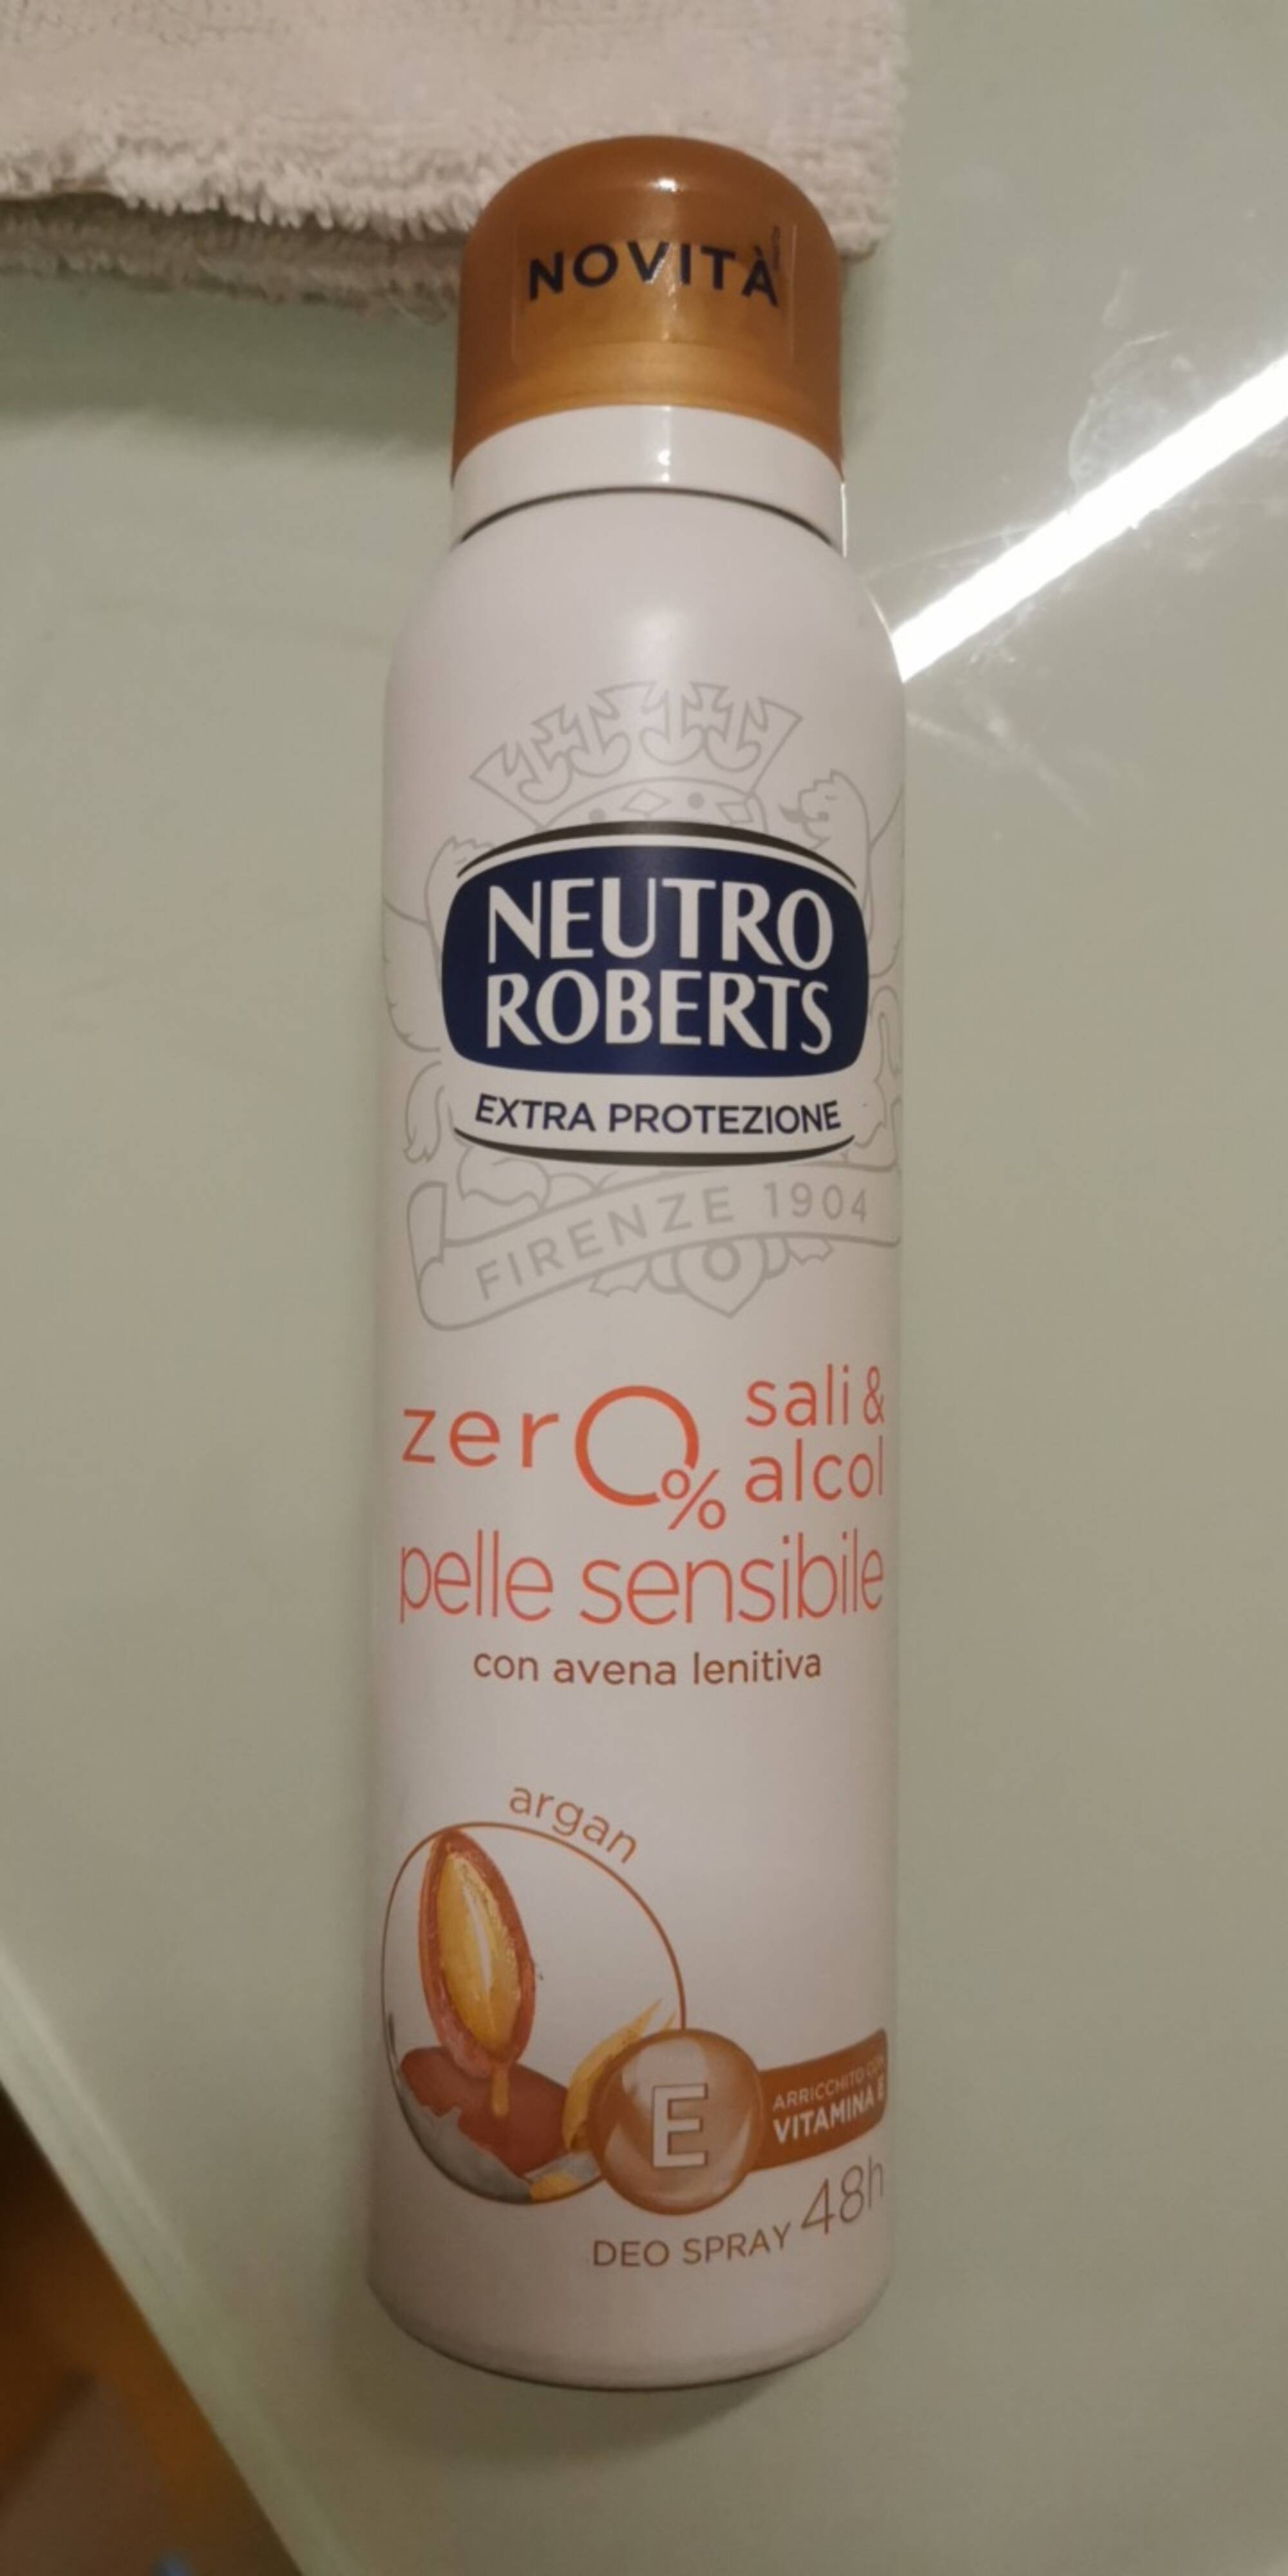 NEUTRO ROBERTS - Novita - Deo spray